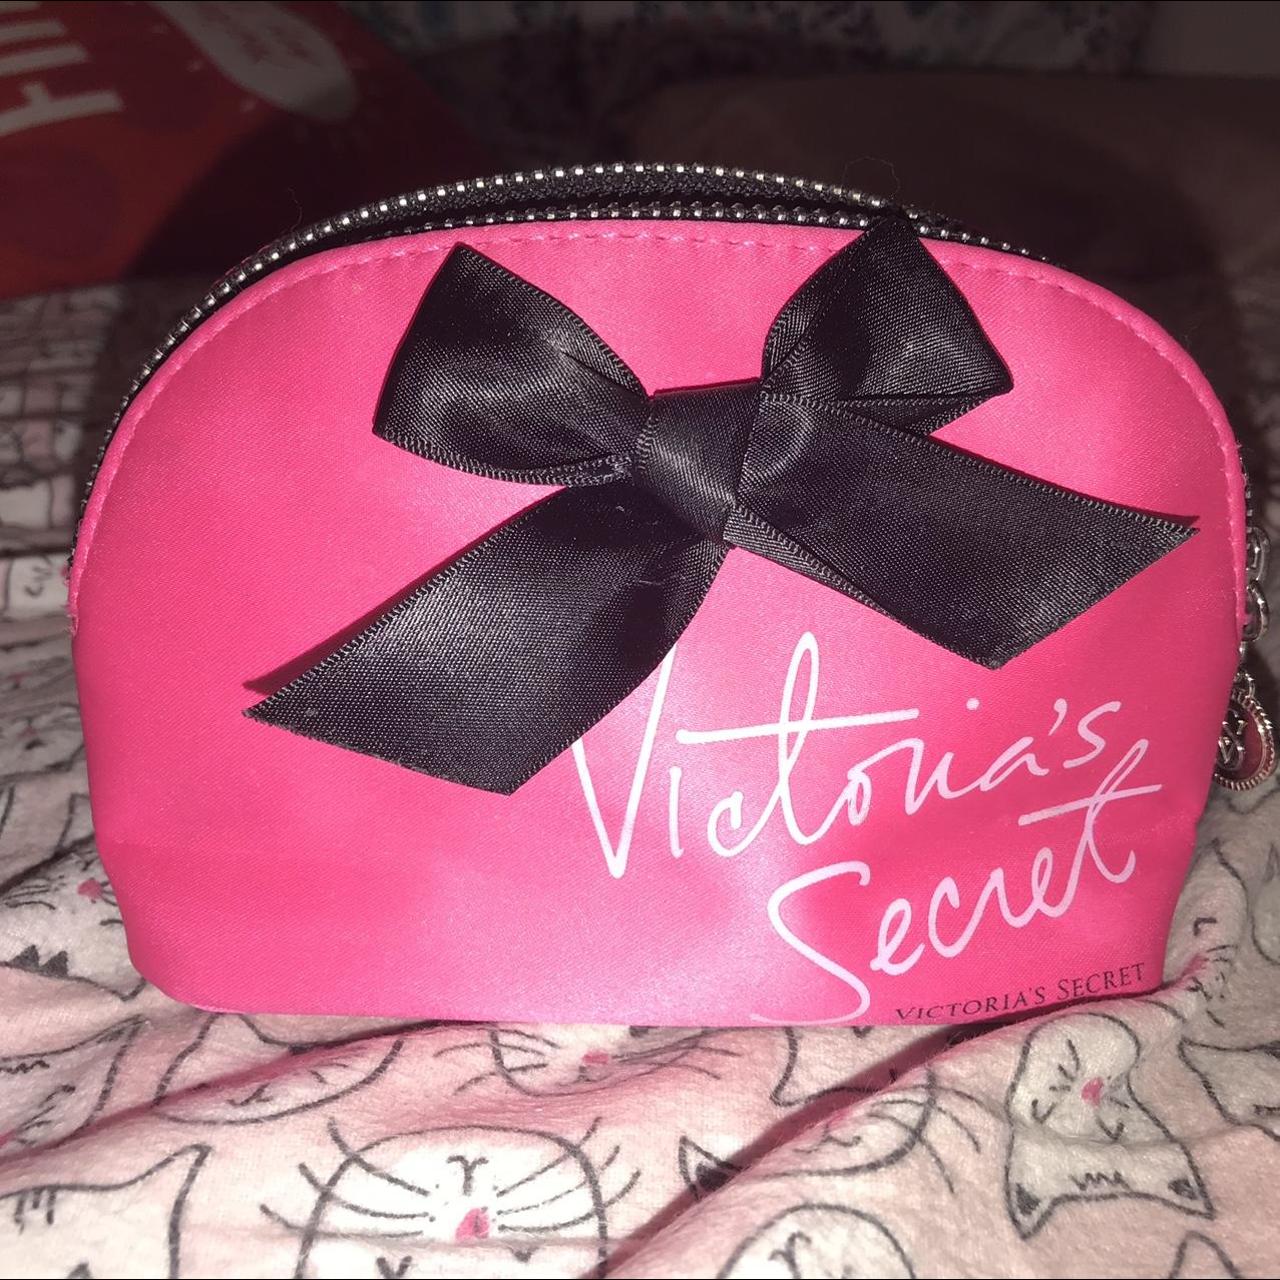 Victoria secret makeup case glitter bag - Depop